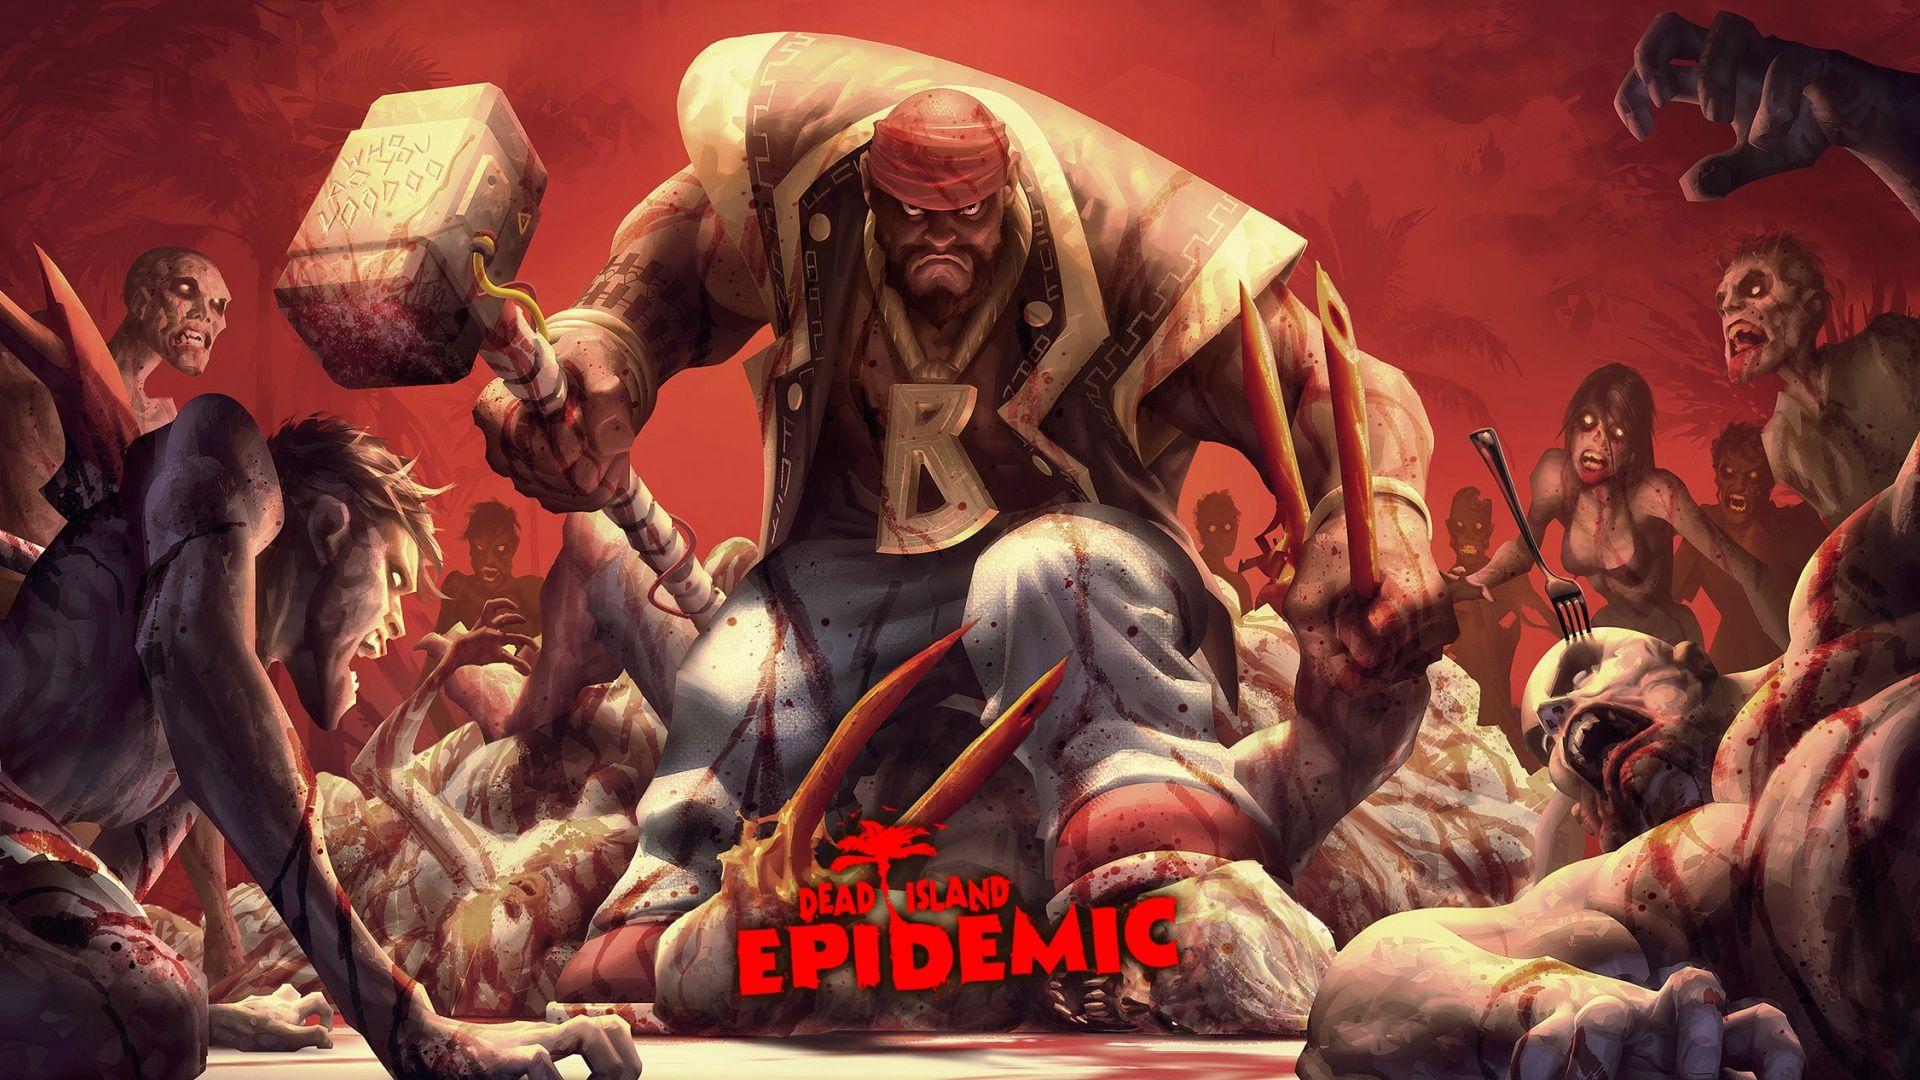 Dead Island Epidemic Wallpaper in jpg format for free download